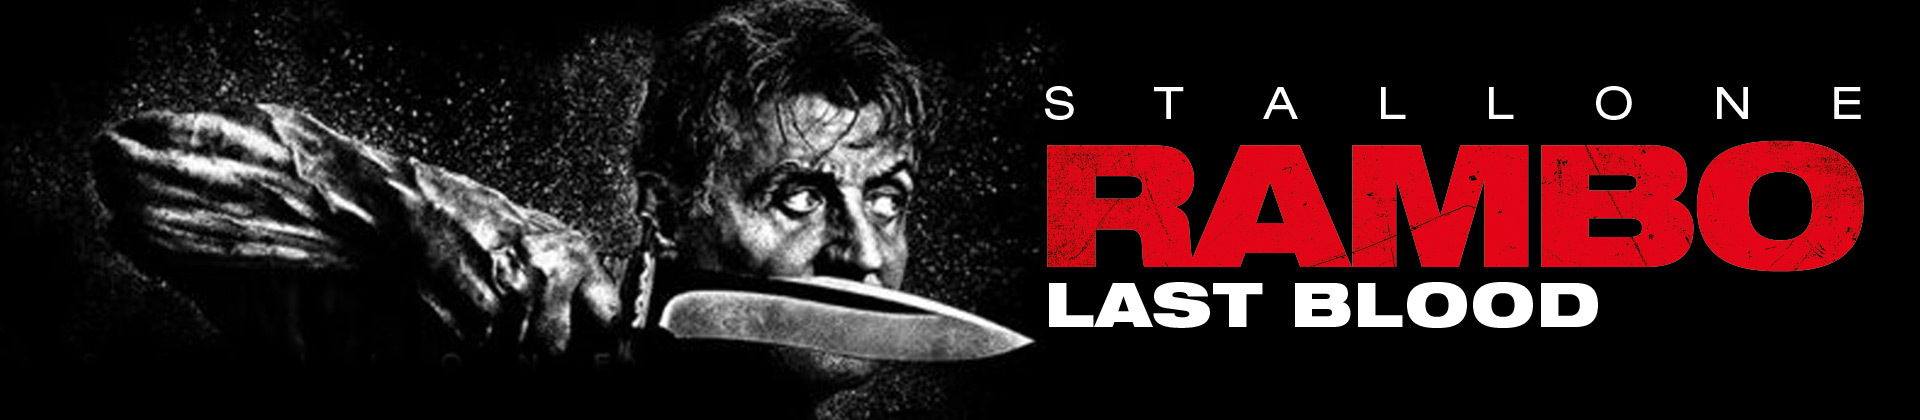 Rambo V: Last Blood